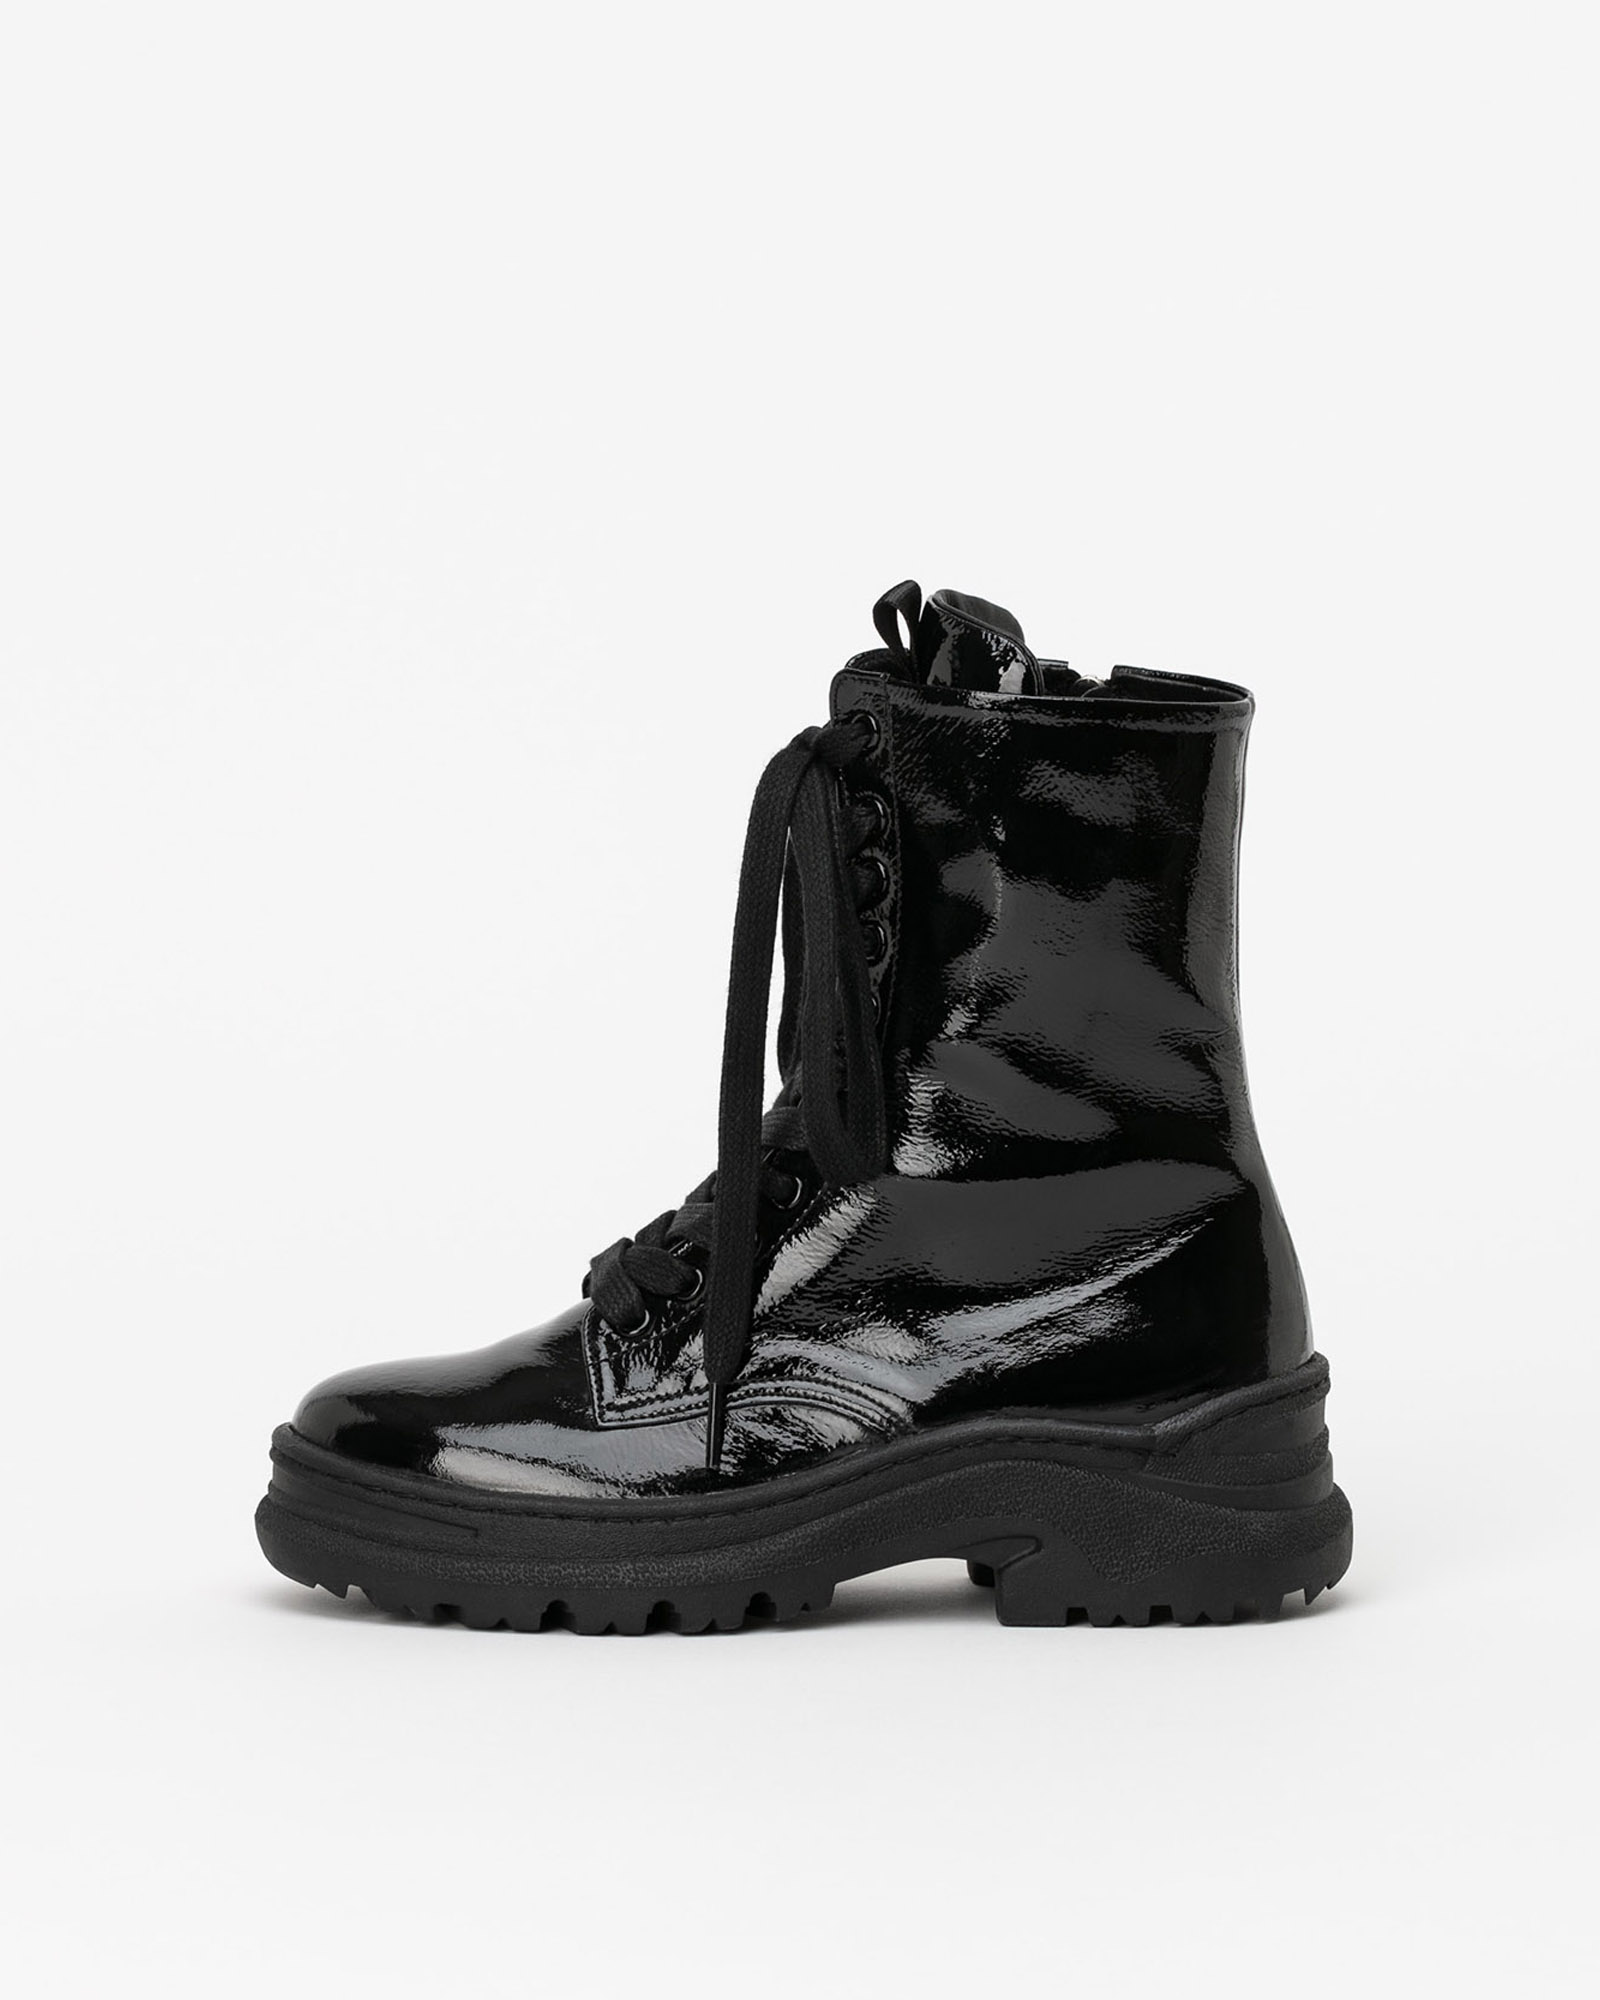 Bonna Treksole Lace-up Boots in Black Wrinkle Patent